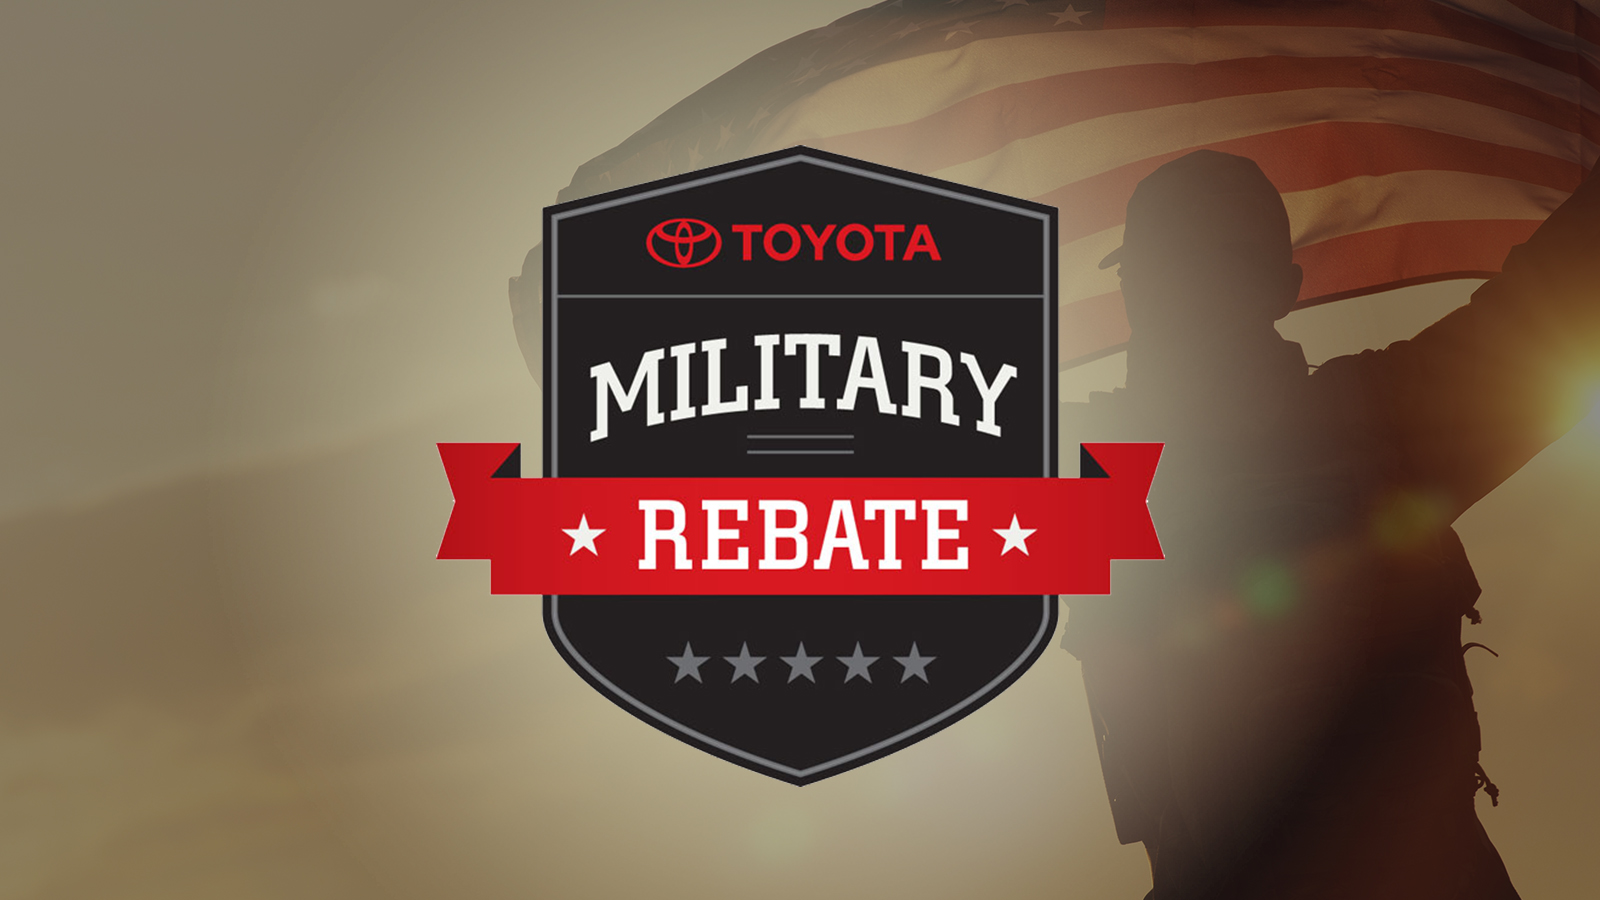 Toyota military rebate Peruzzi Toyota Blog